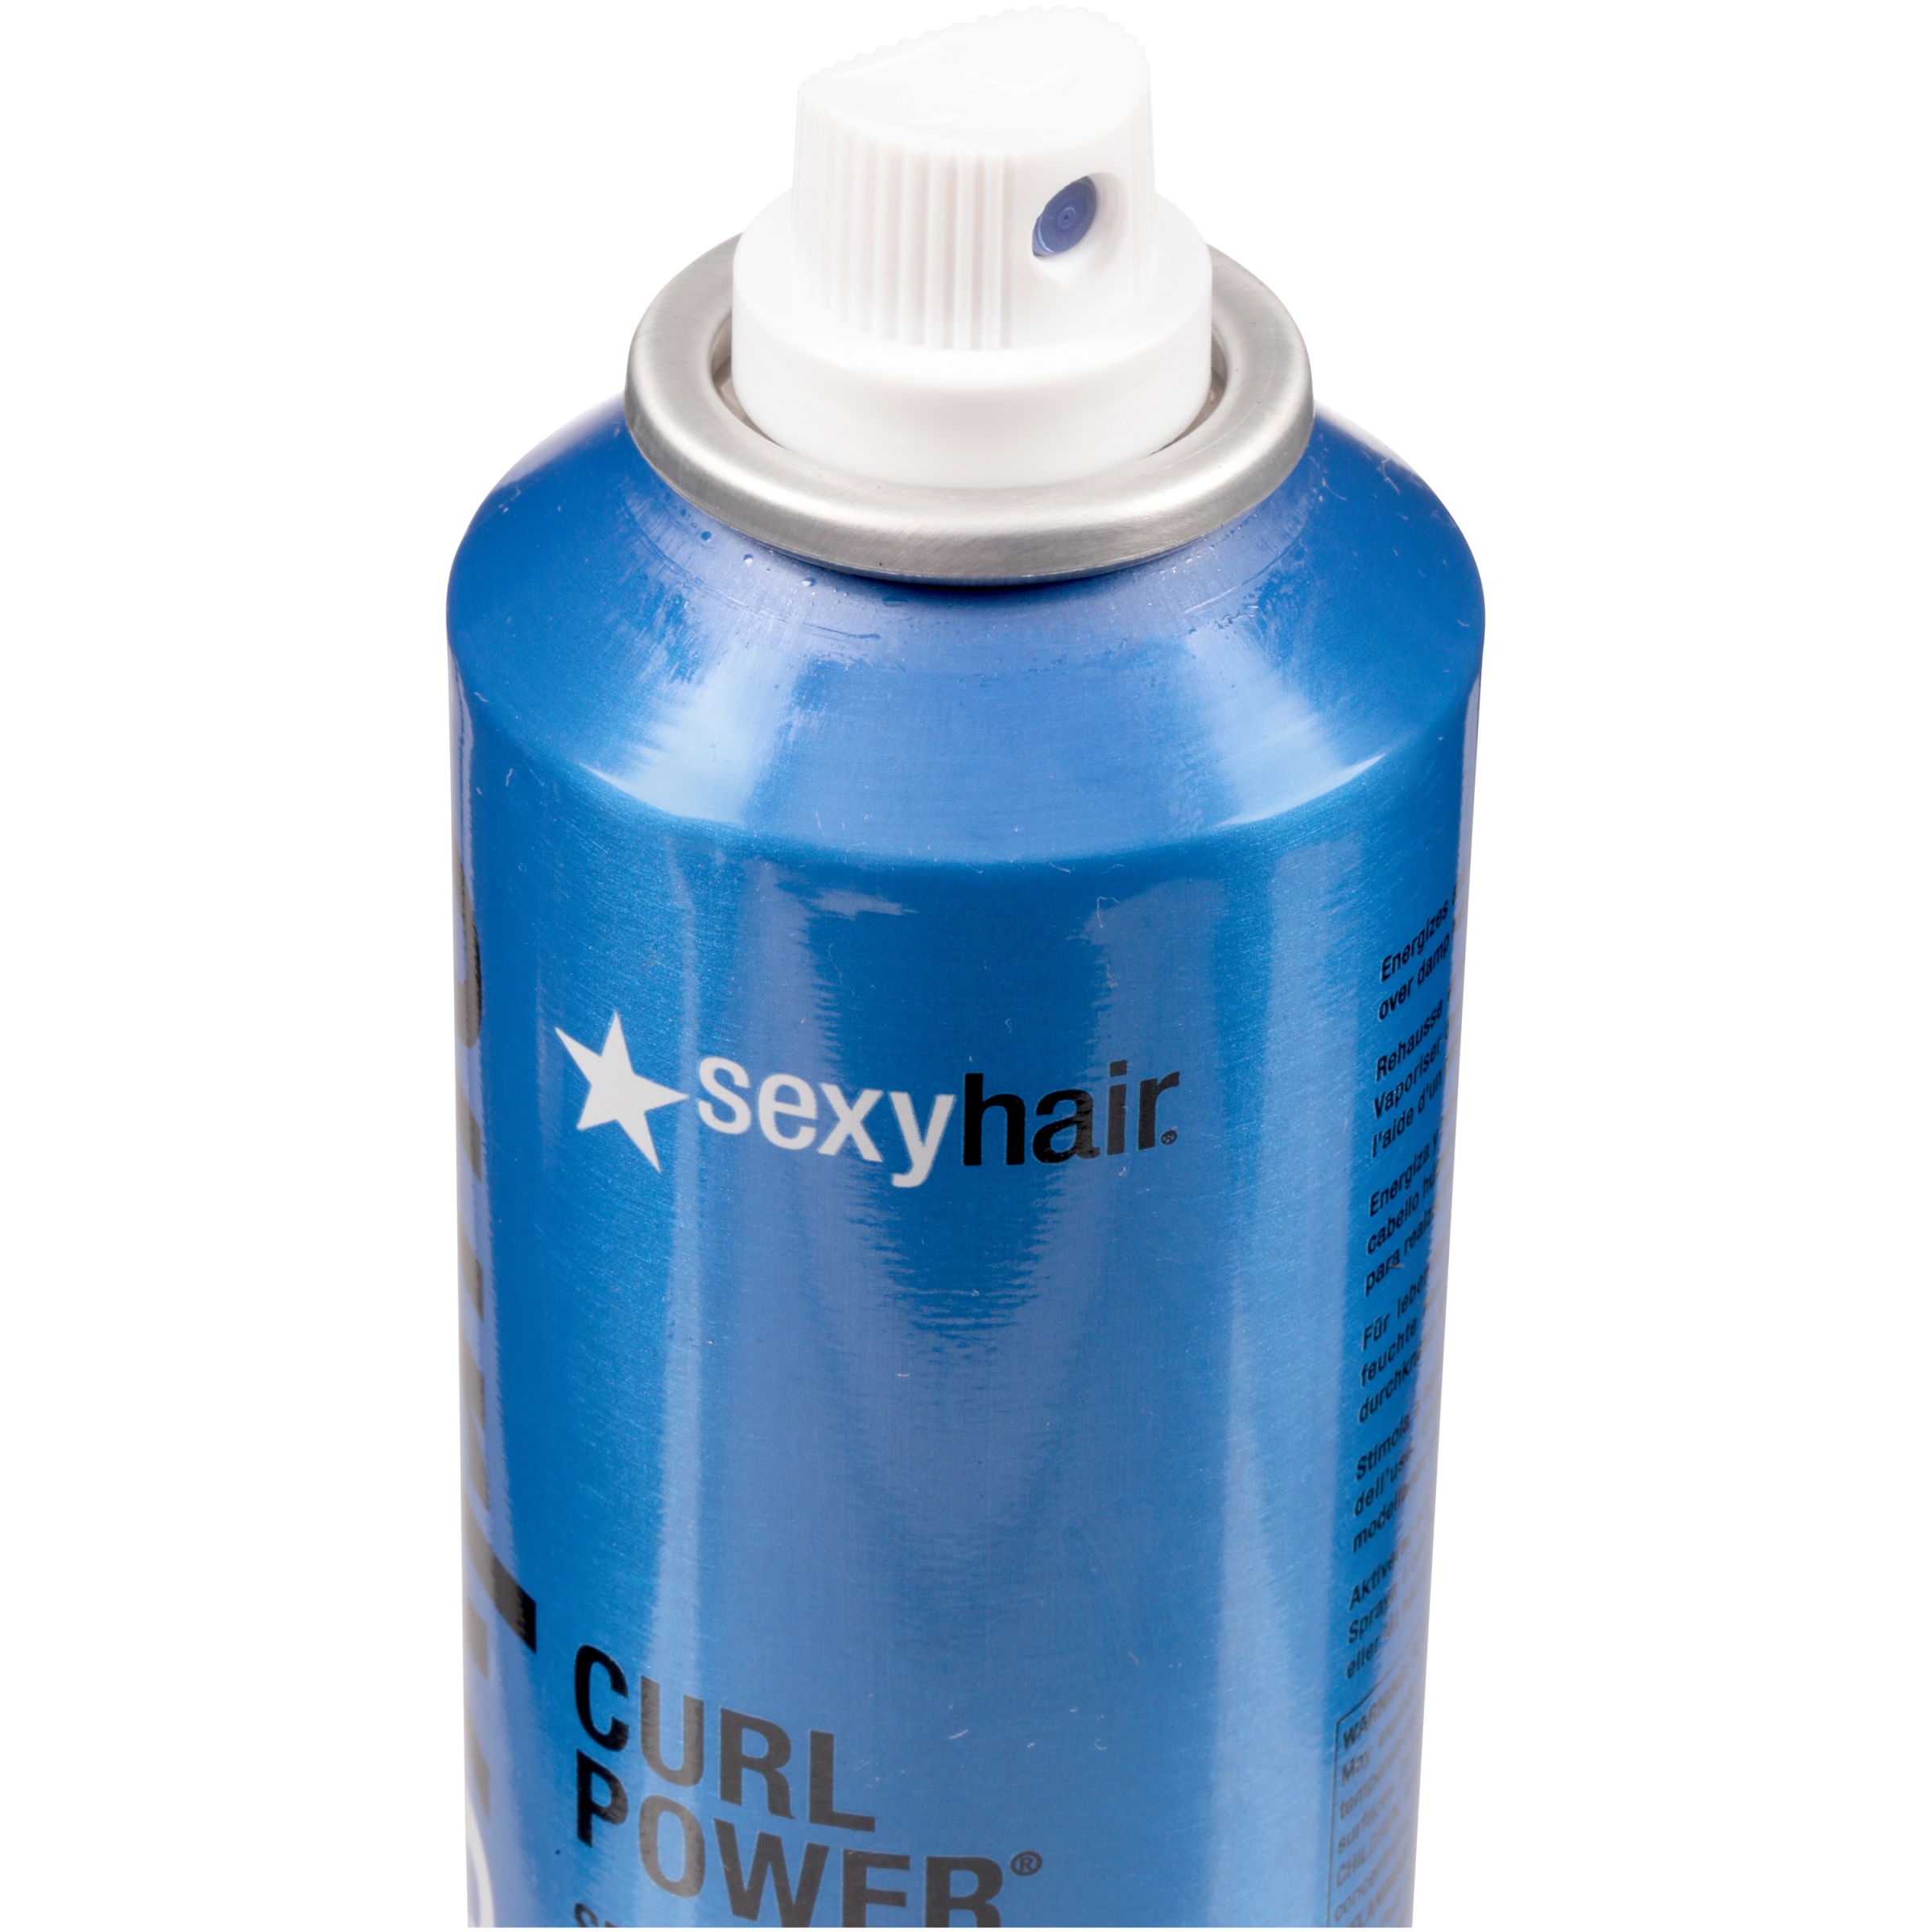 Sexy Hair Curlysexyhair Curl Power Spray Foam, 8.4 oz - image 4 of 9